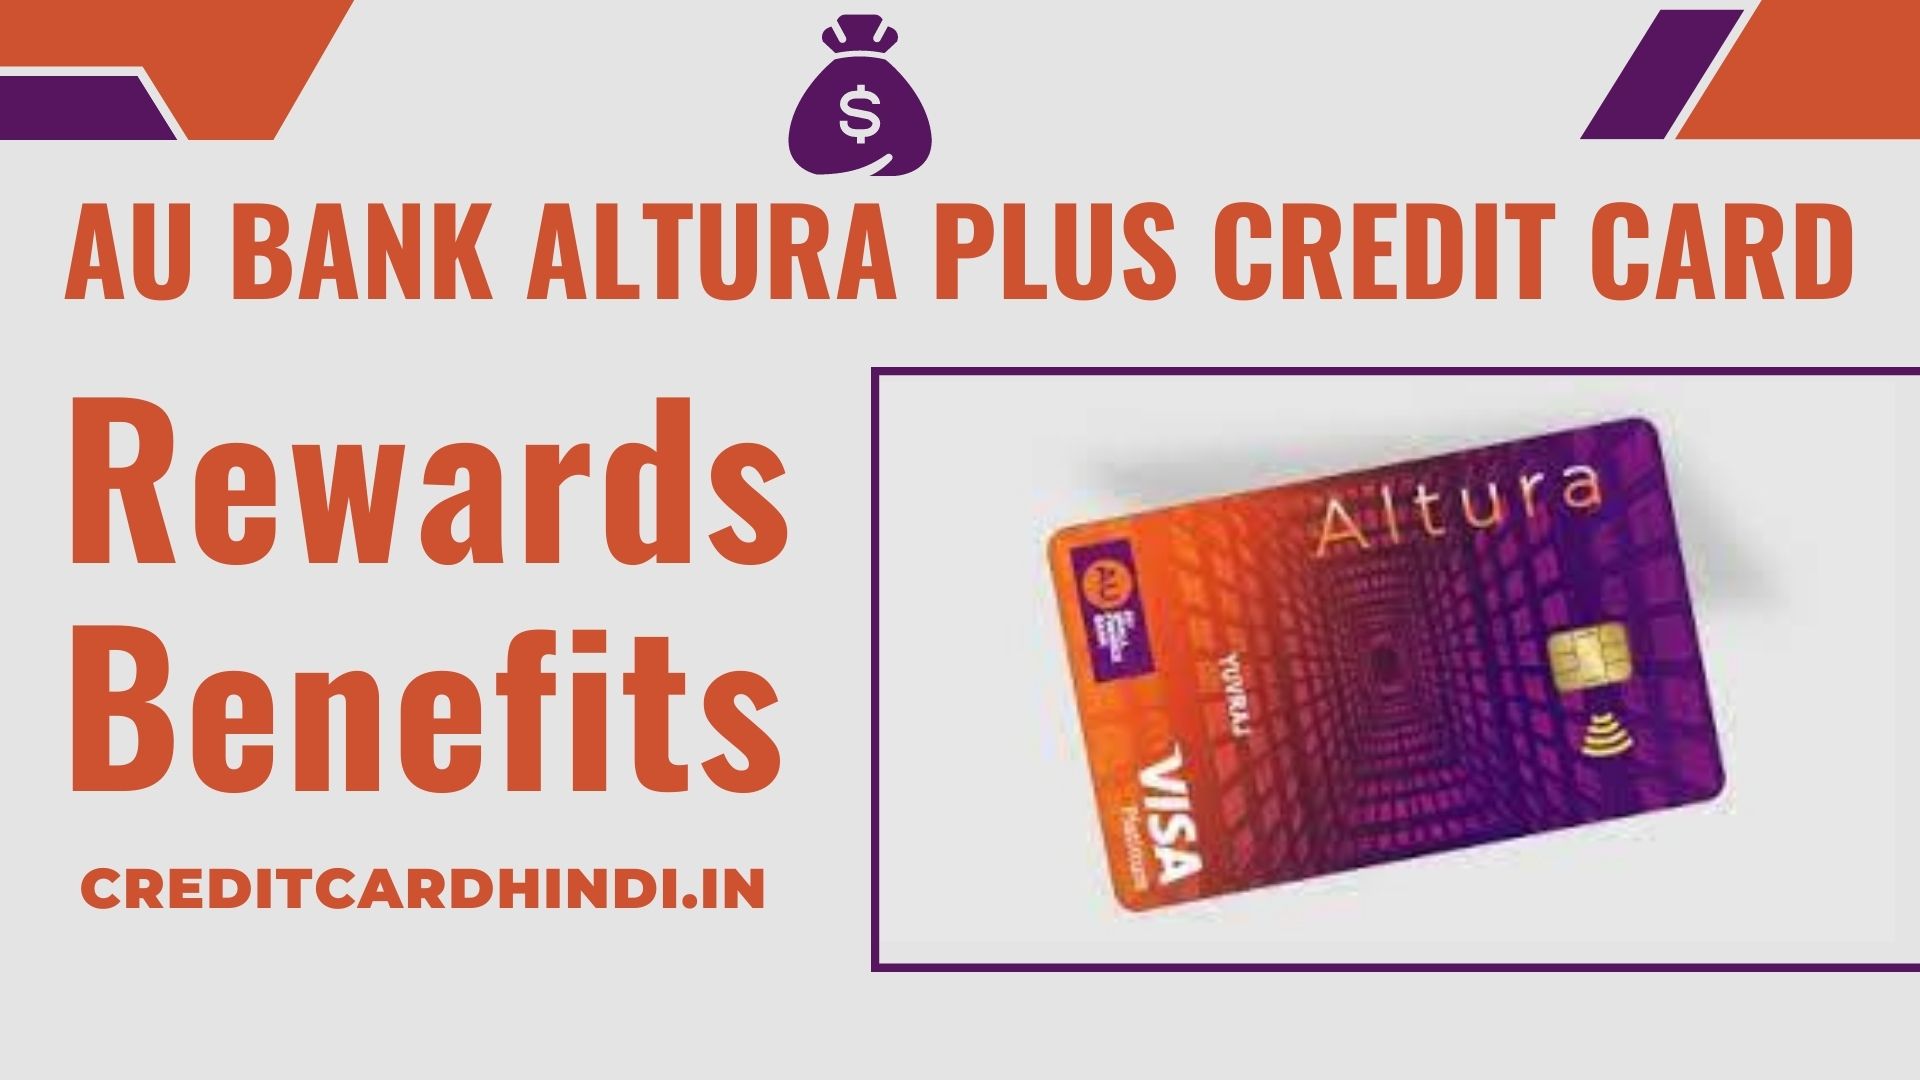 AU Bank Altura Plus Credit Card Rewards & Benefits